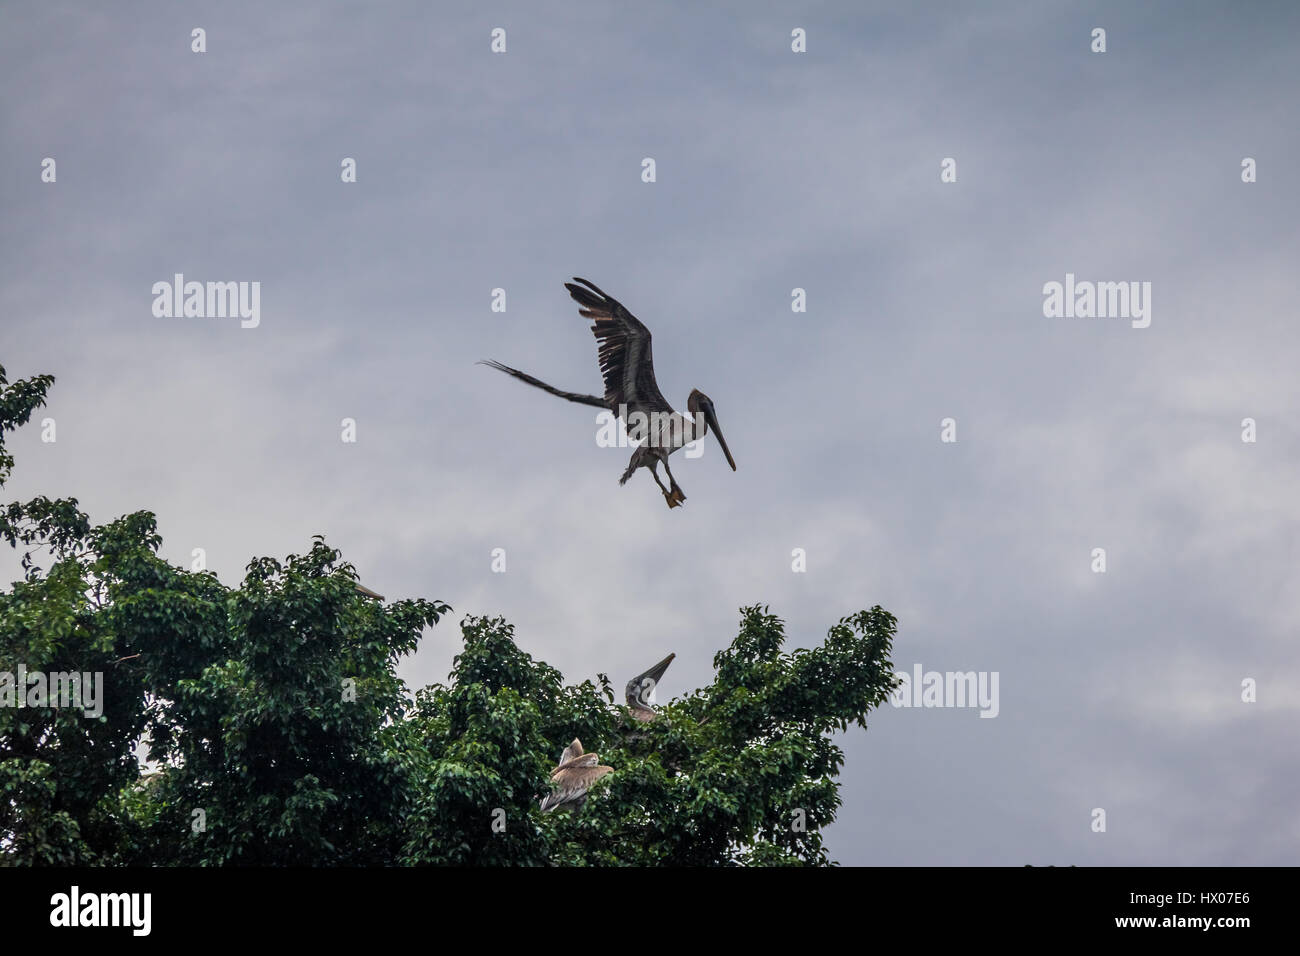 Brown pelican flying over a tree - Panama City, Panama Stock Photo